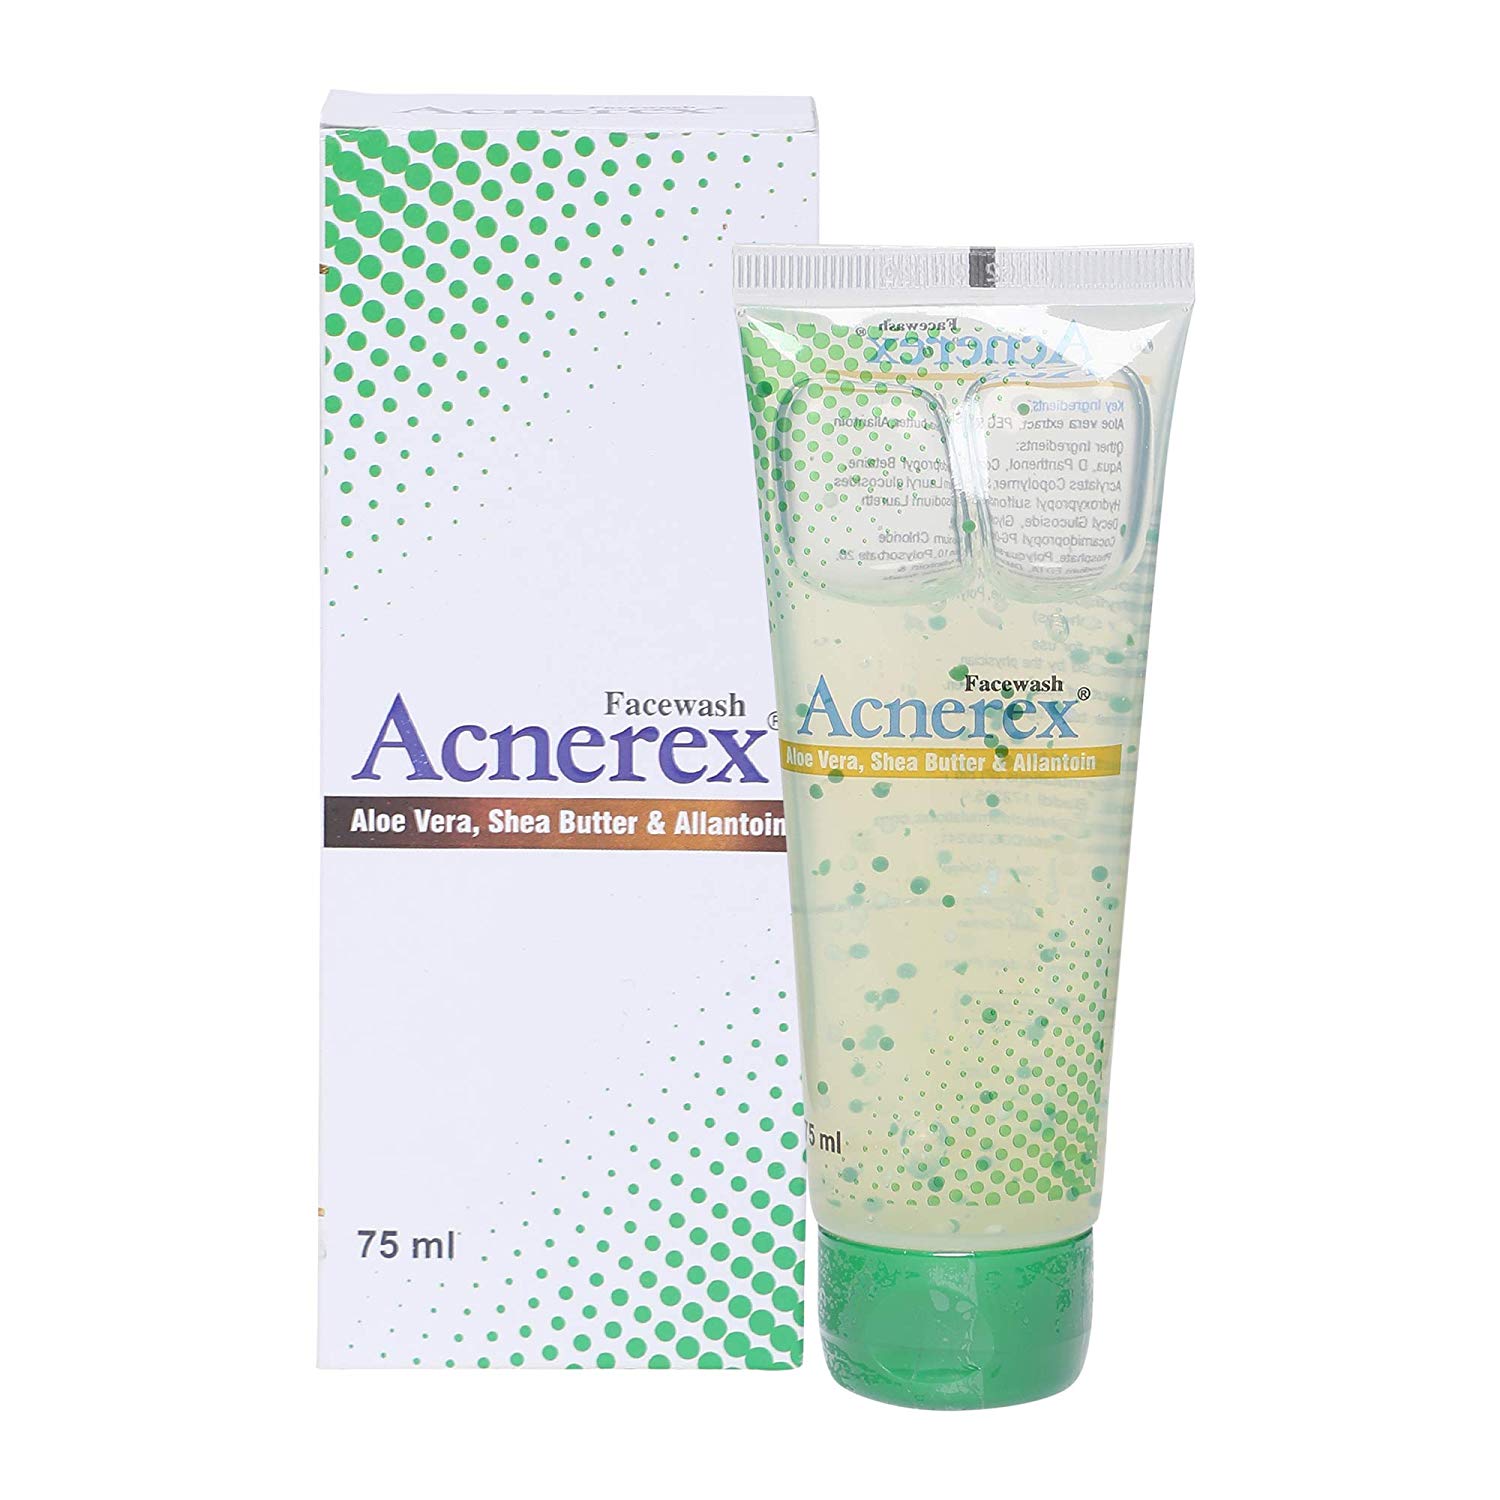 Acnerex Face Wash 75ml